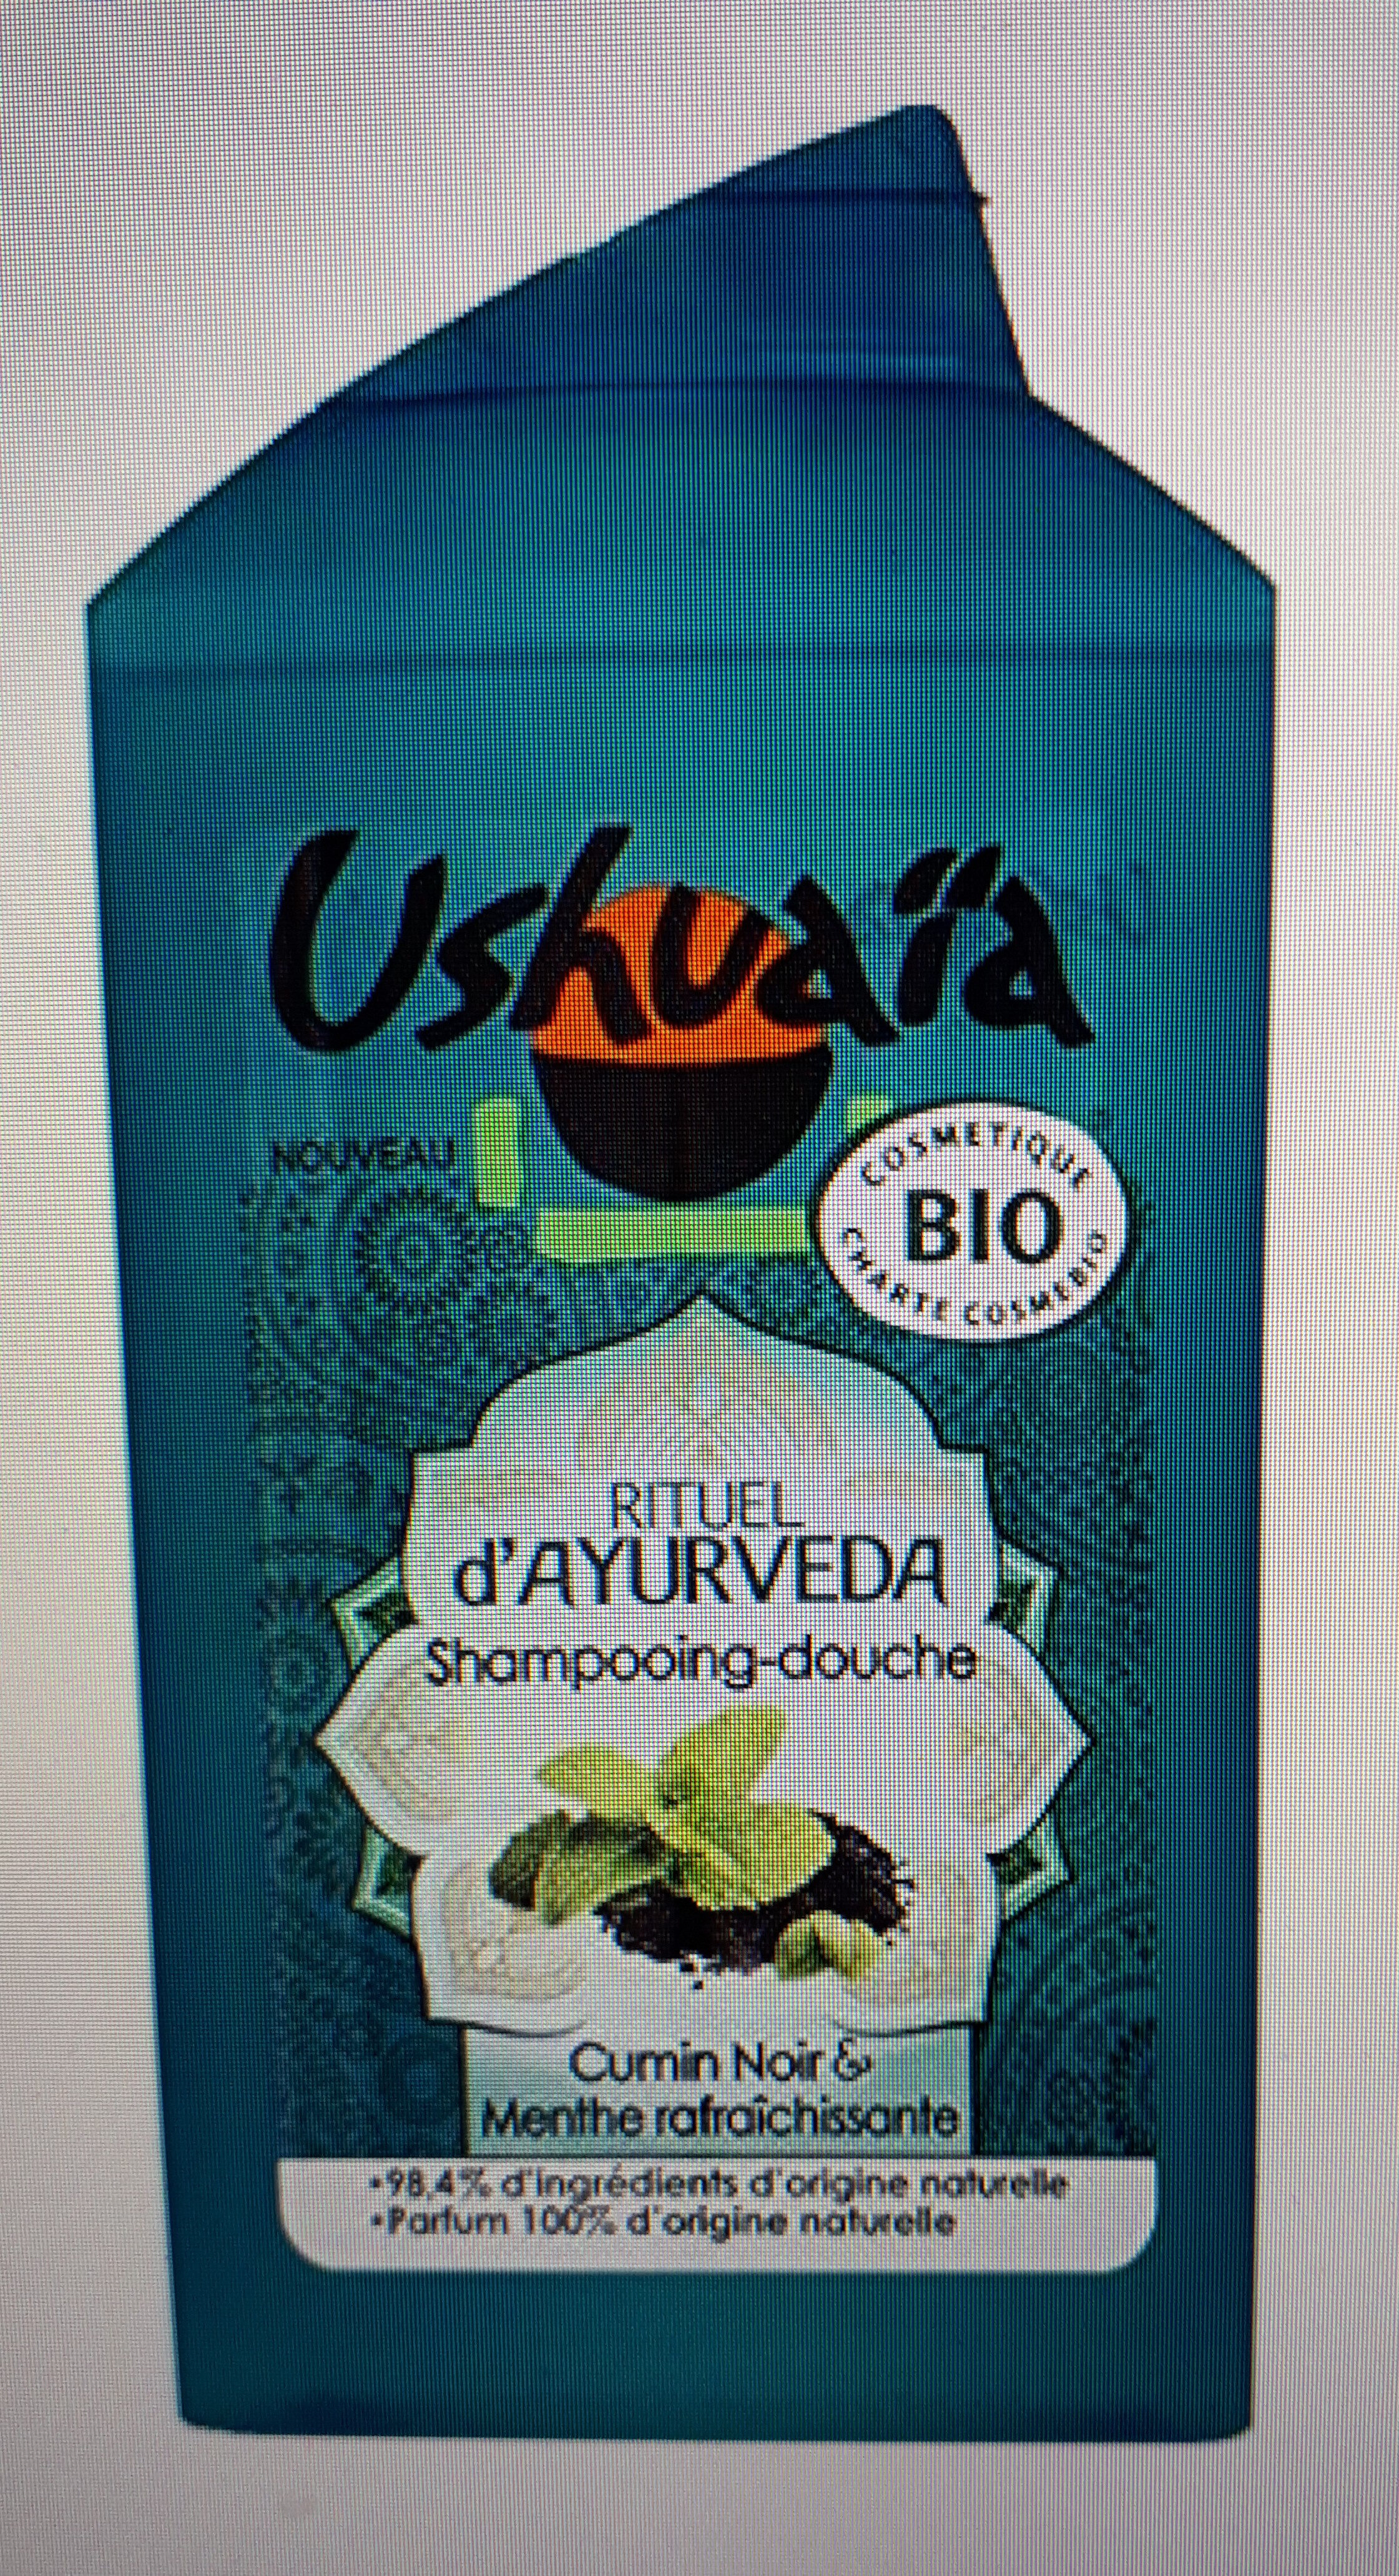 Rituel d'Ayurveda shampooing-douche - Produkto - fr